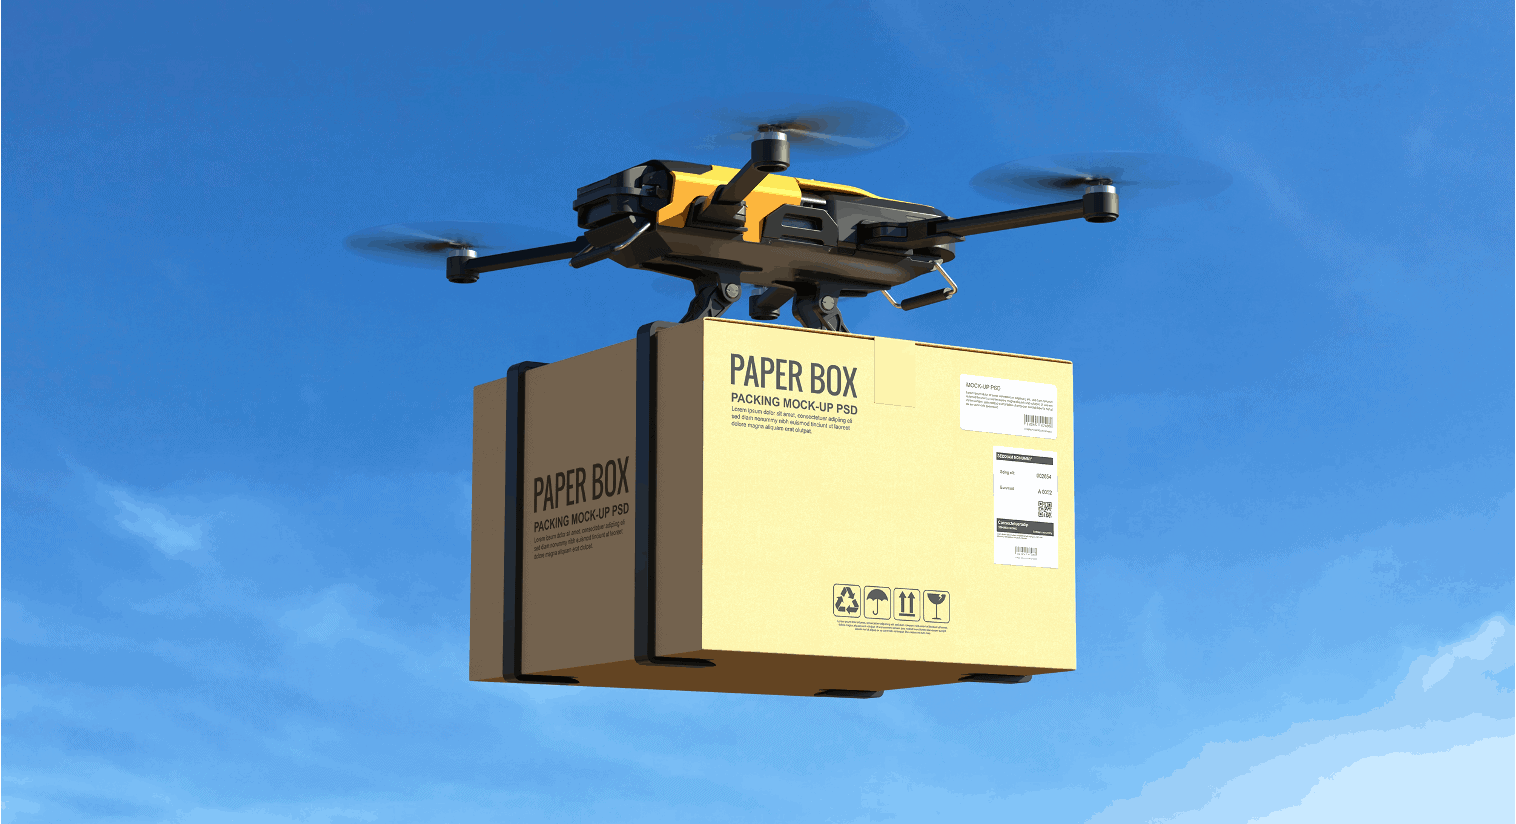 Amazon's Prime Air Service Transforming Delivery Through Drones